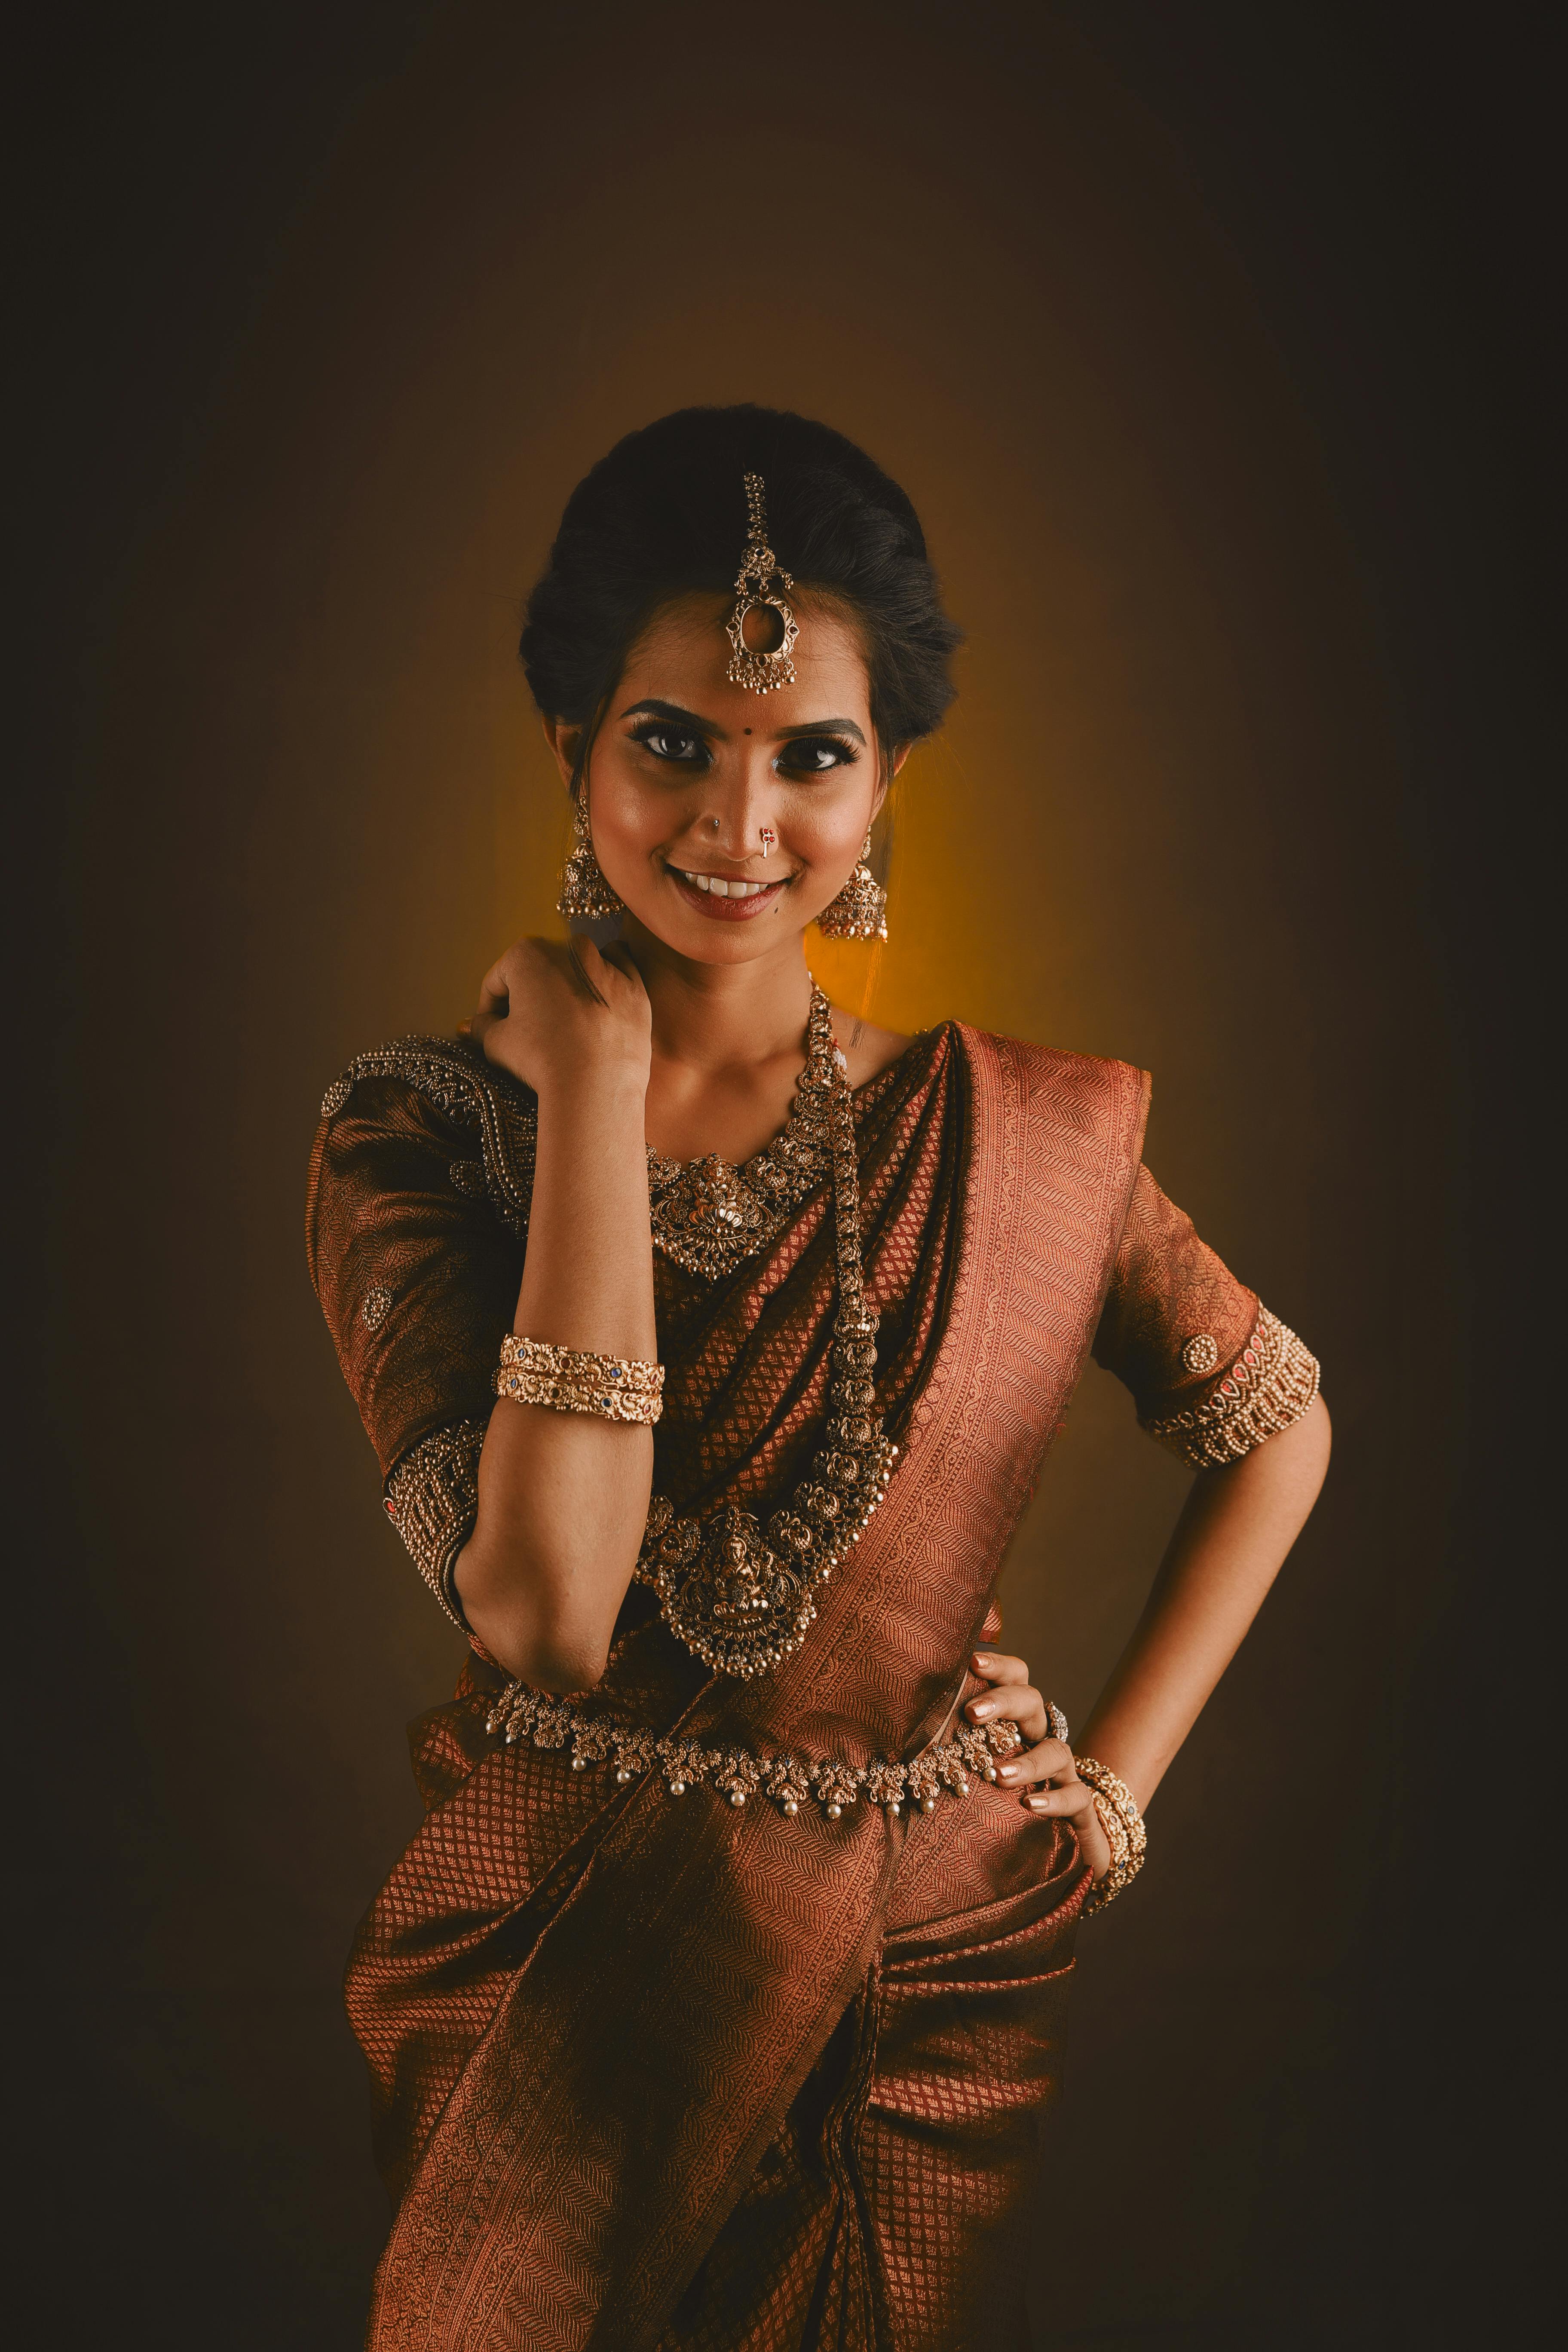 Portrait of Woman Wearing Sari · Free Stock Photo